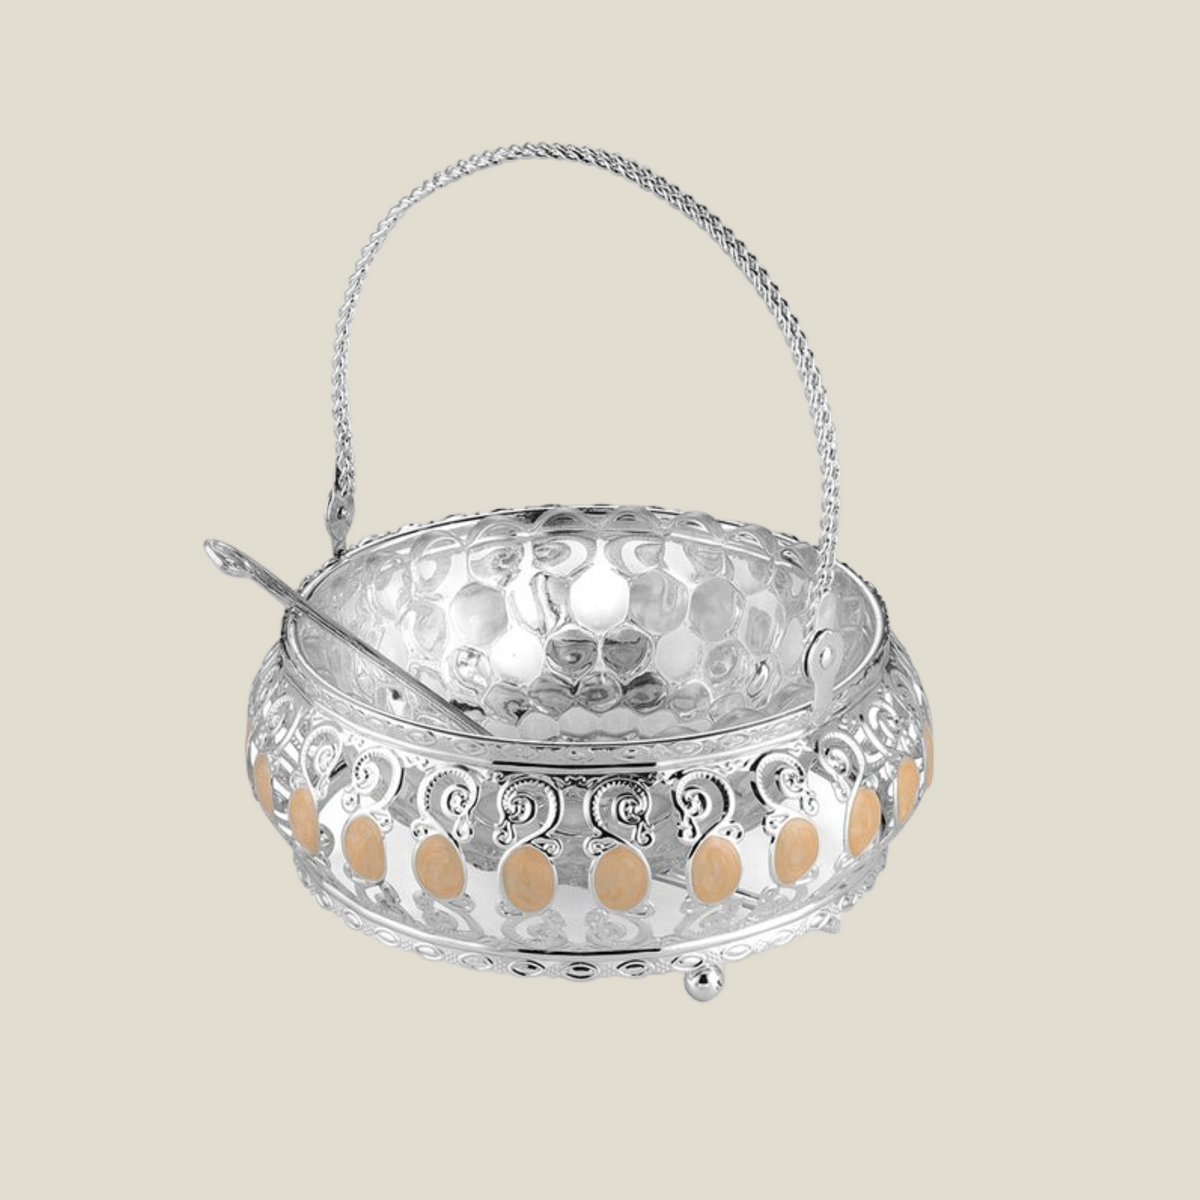 Enamel Basket With Glass Bowl- Peach